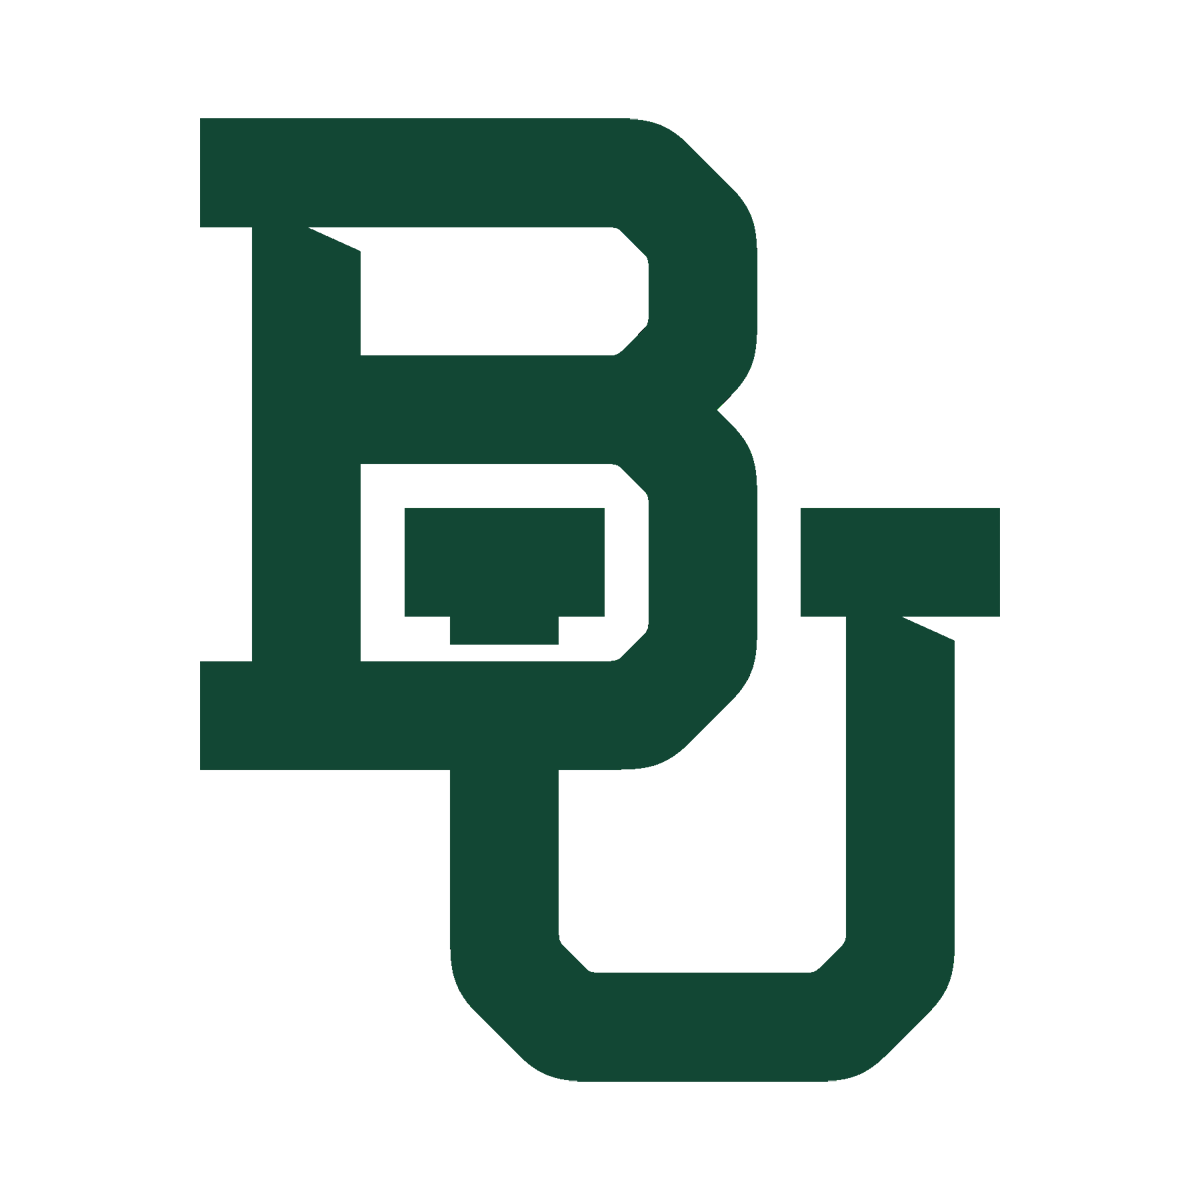 Baylor Bears logo